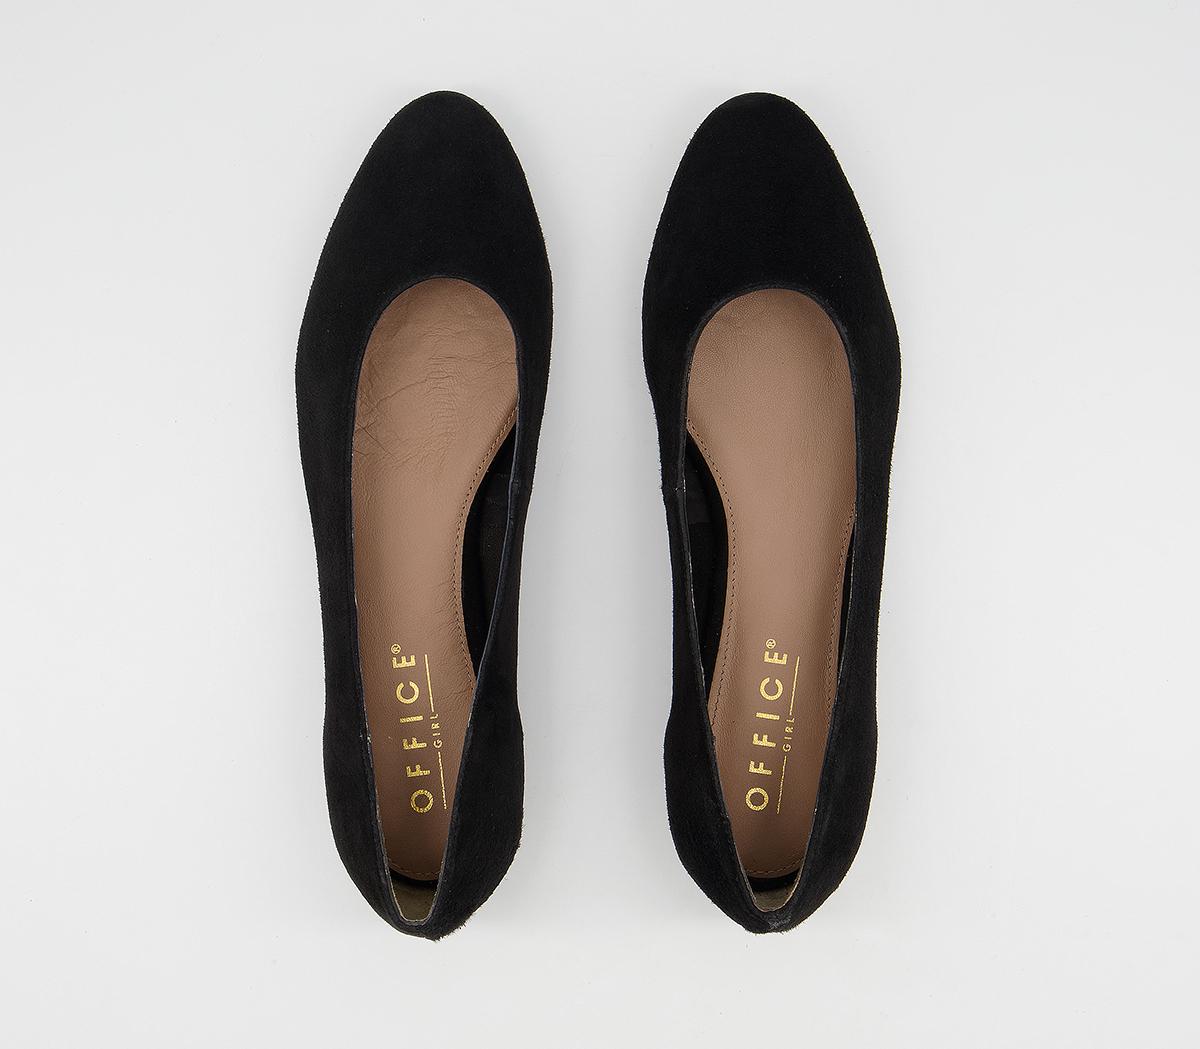 OFFICE Friendly Soft Almond Toe Pumps Black Suede - Flat Shoes for Women